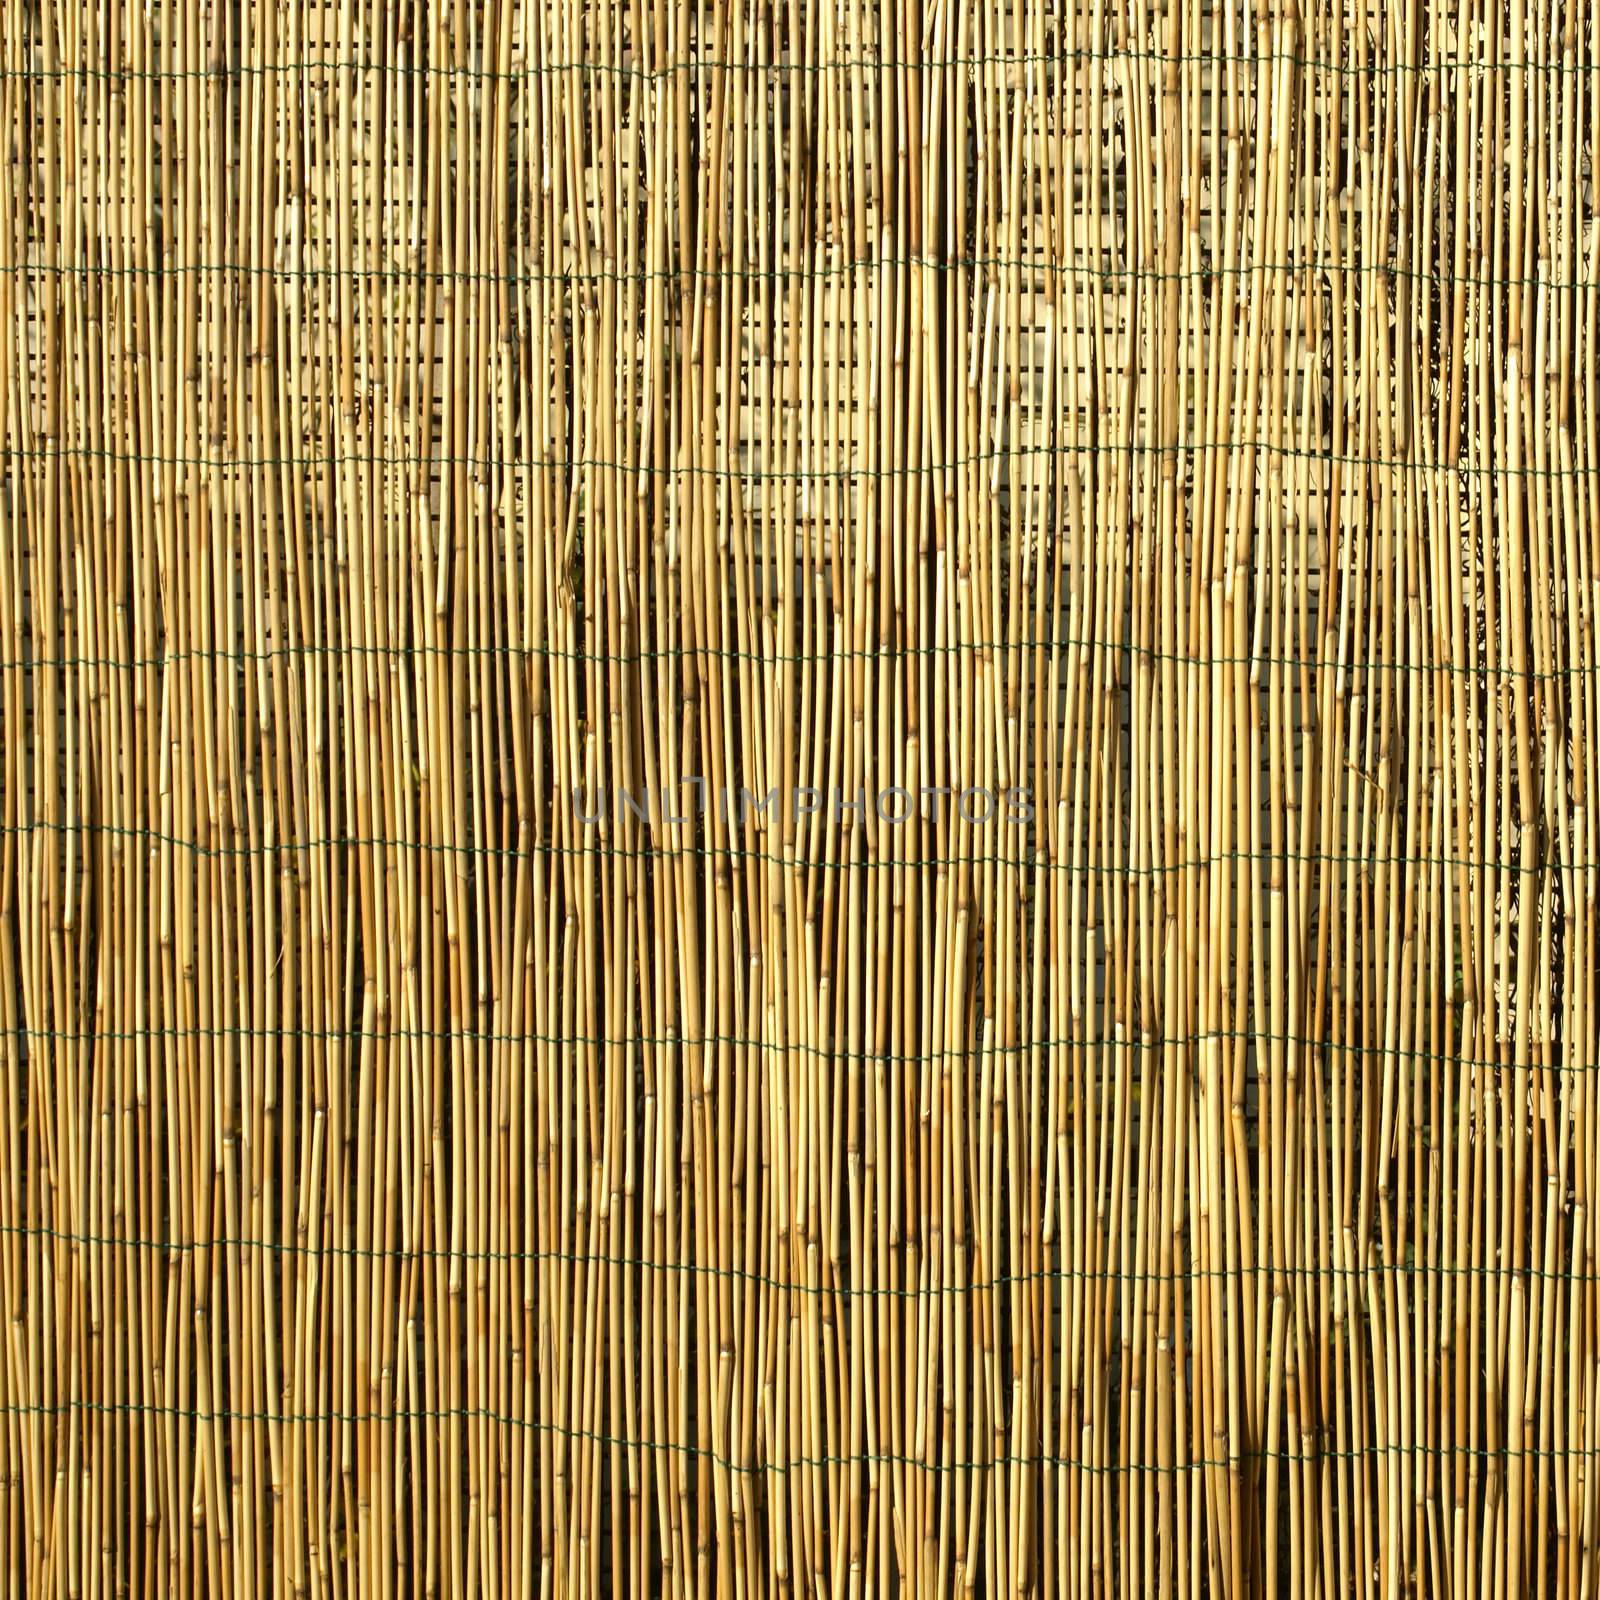 Bamboo background by claudiodivizia